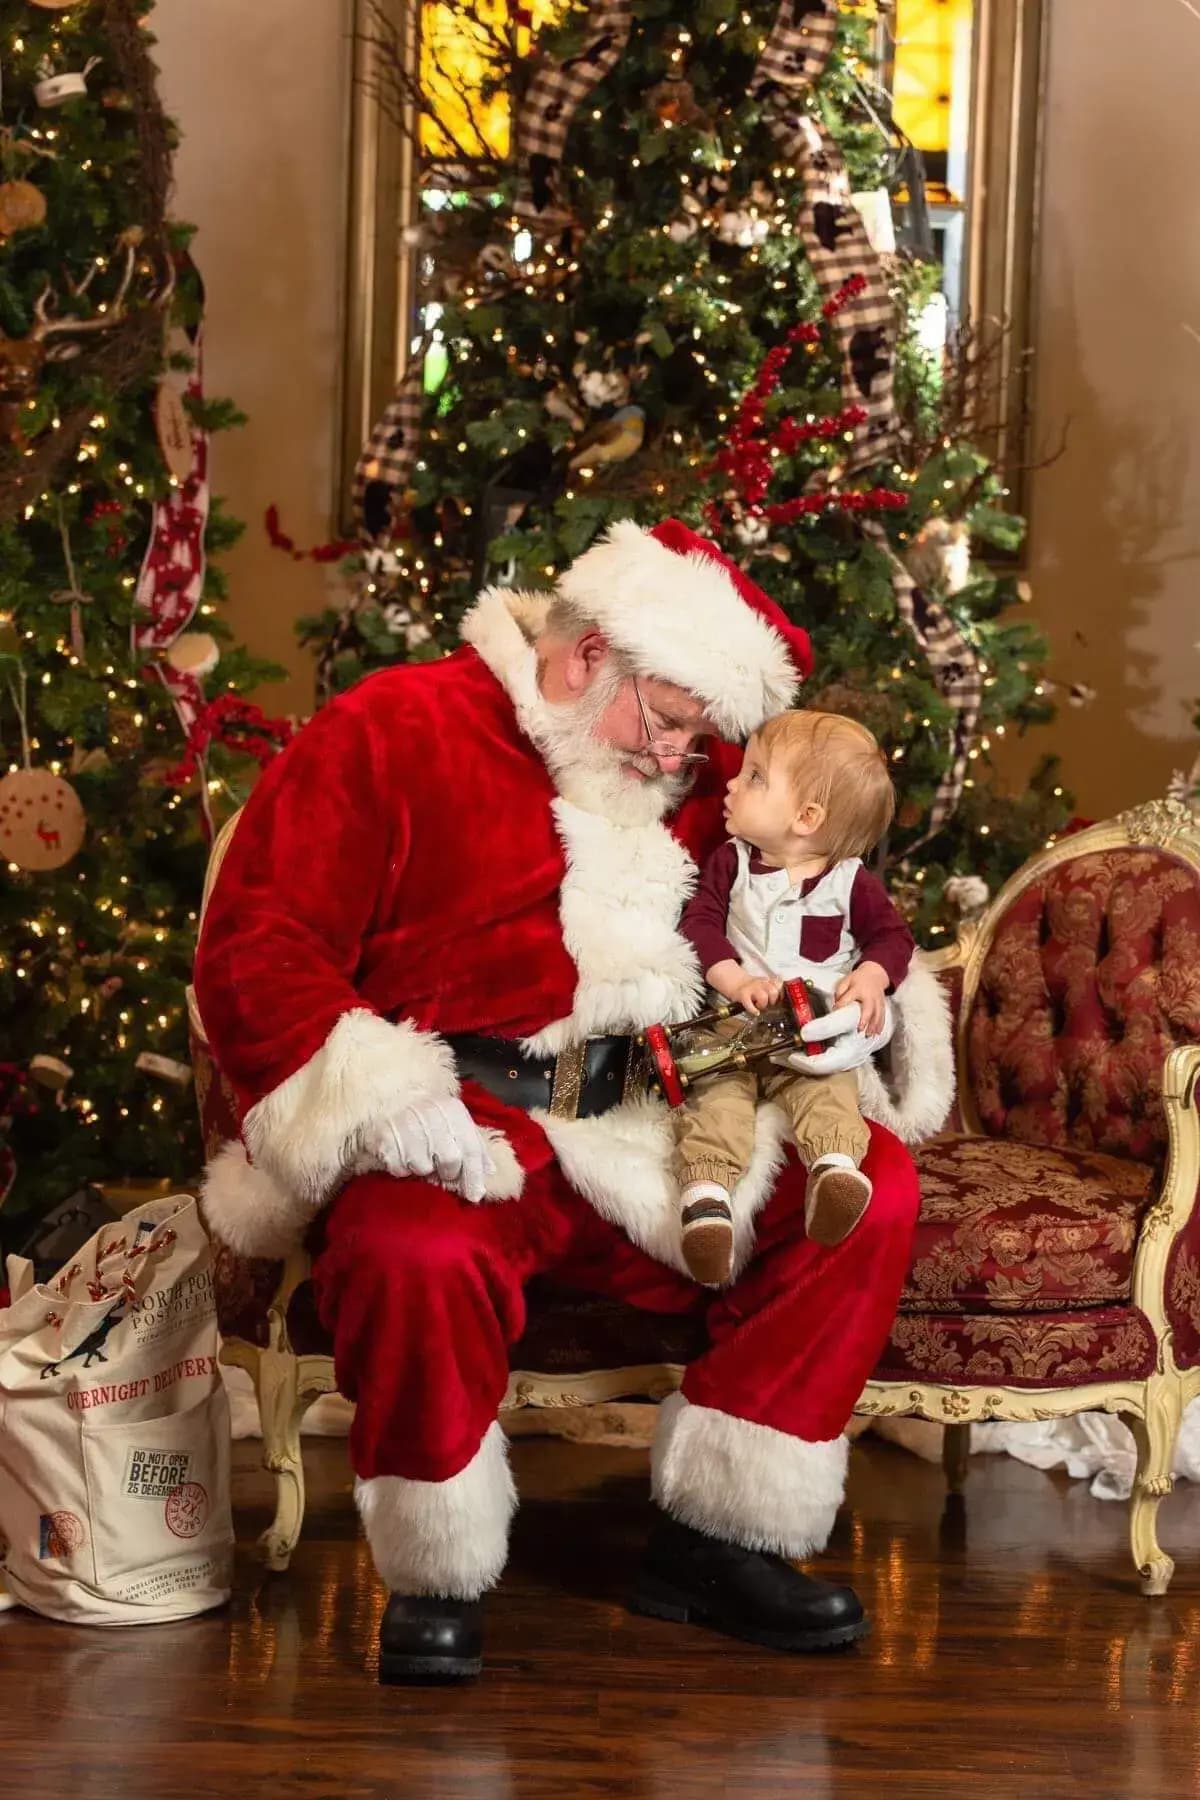 Santa with Child